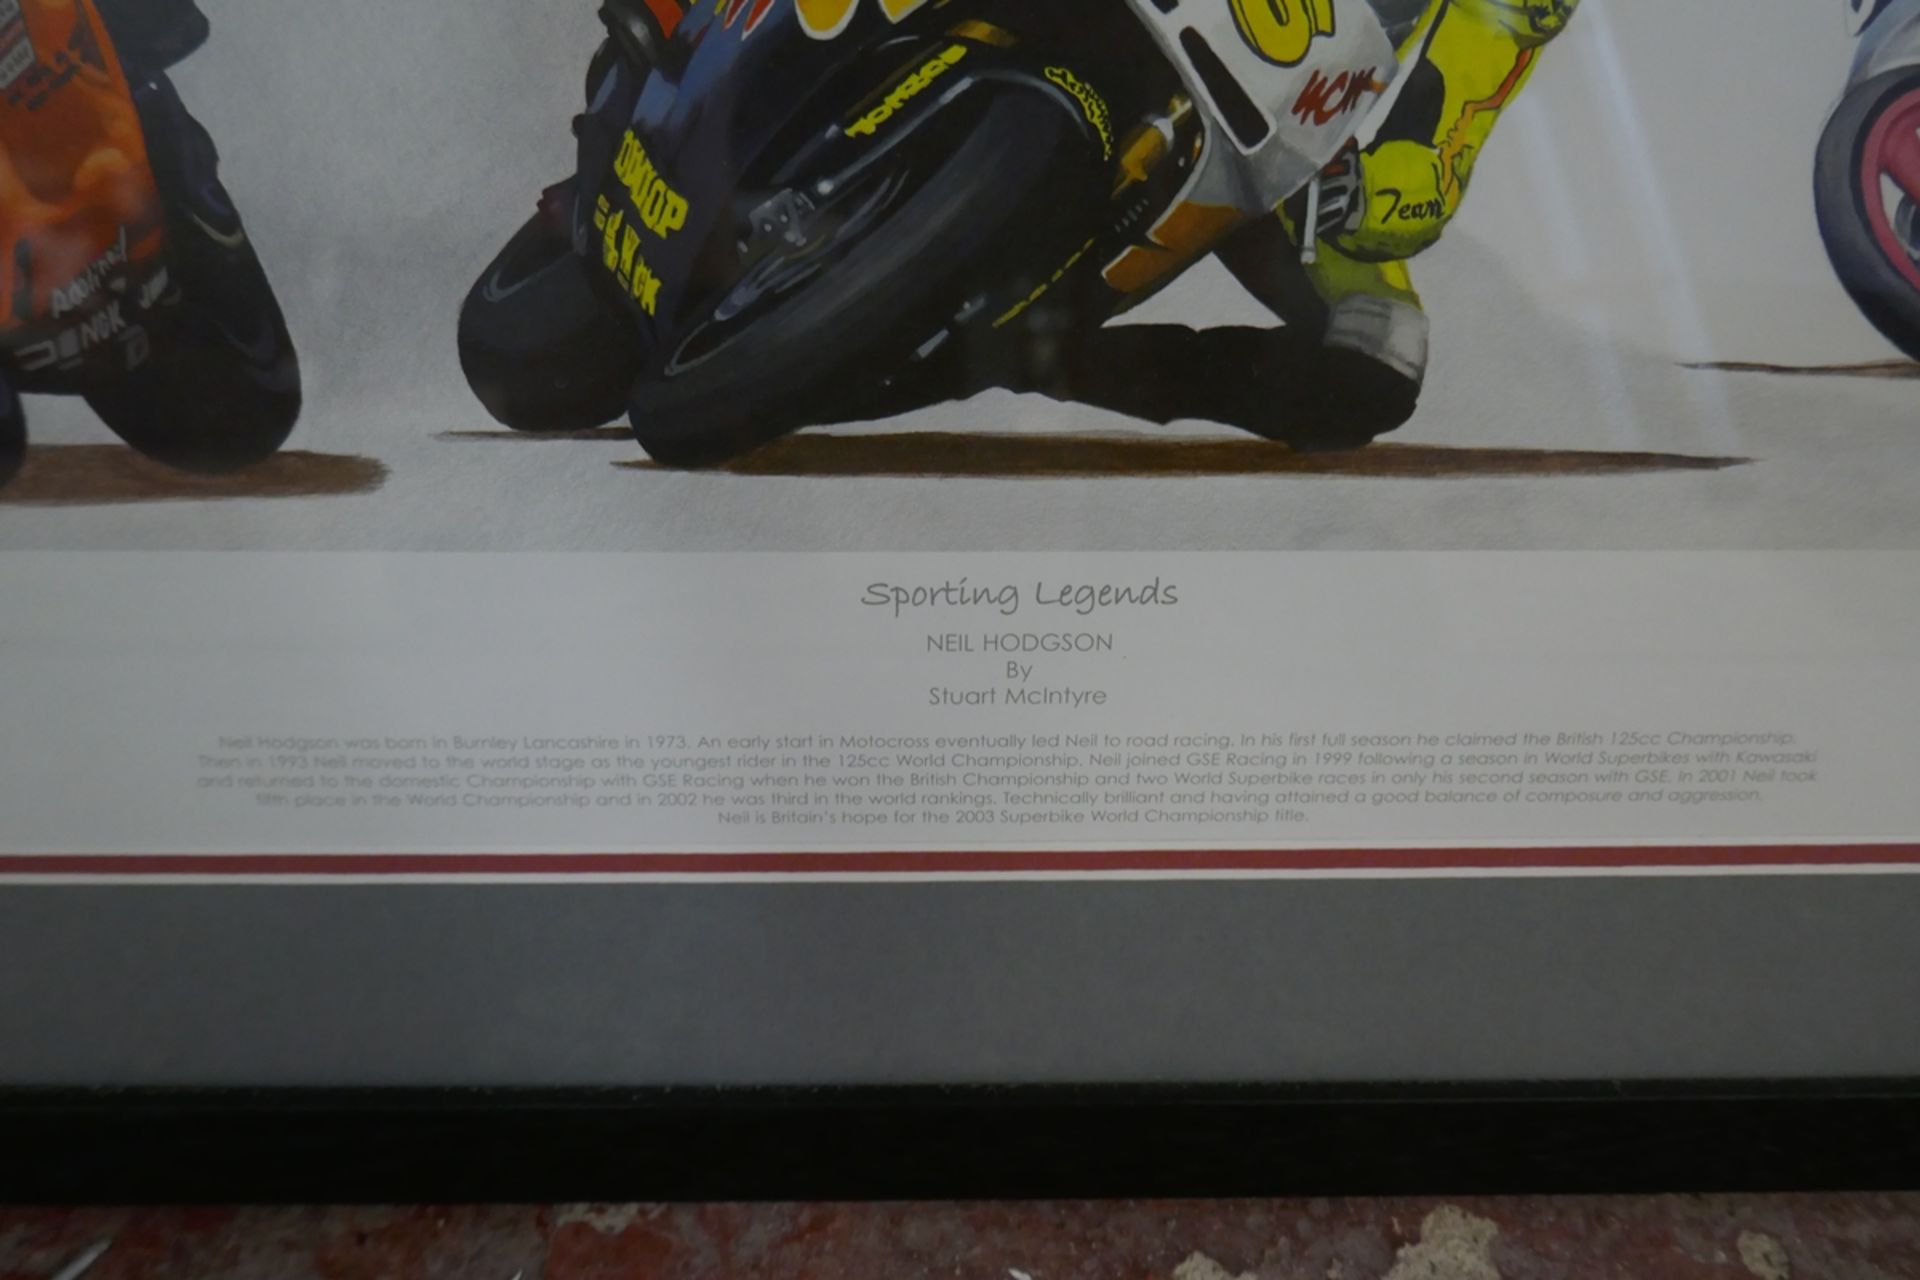 Sporting legends print - Neil Hodgson - Approx image size: 56cm x 44cm - Image 2 of 2